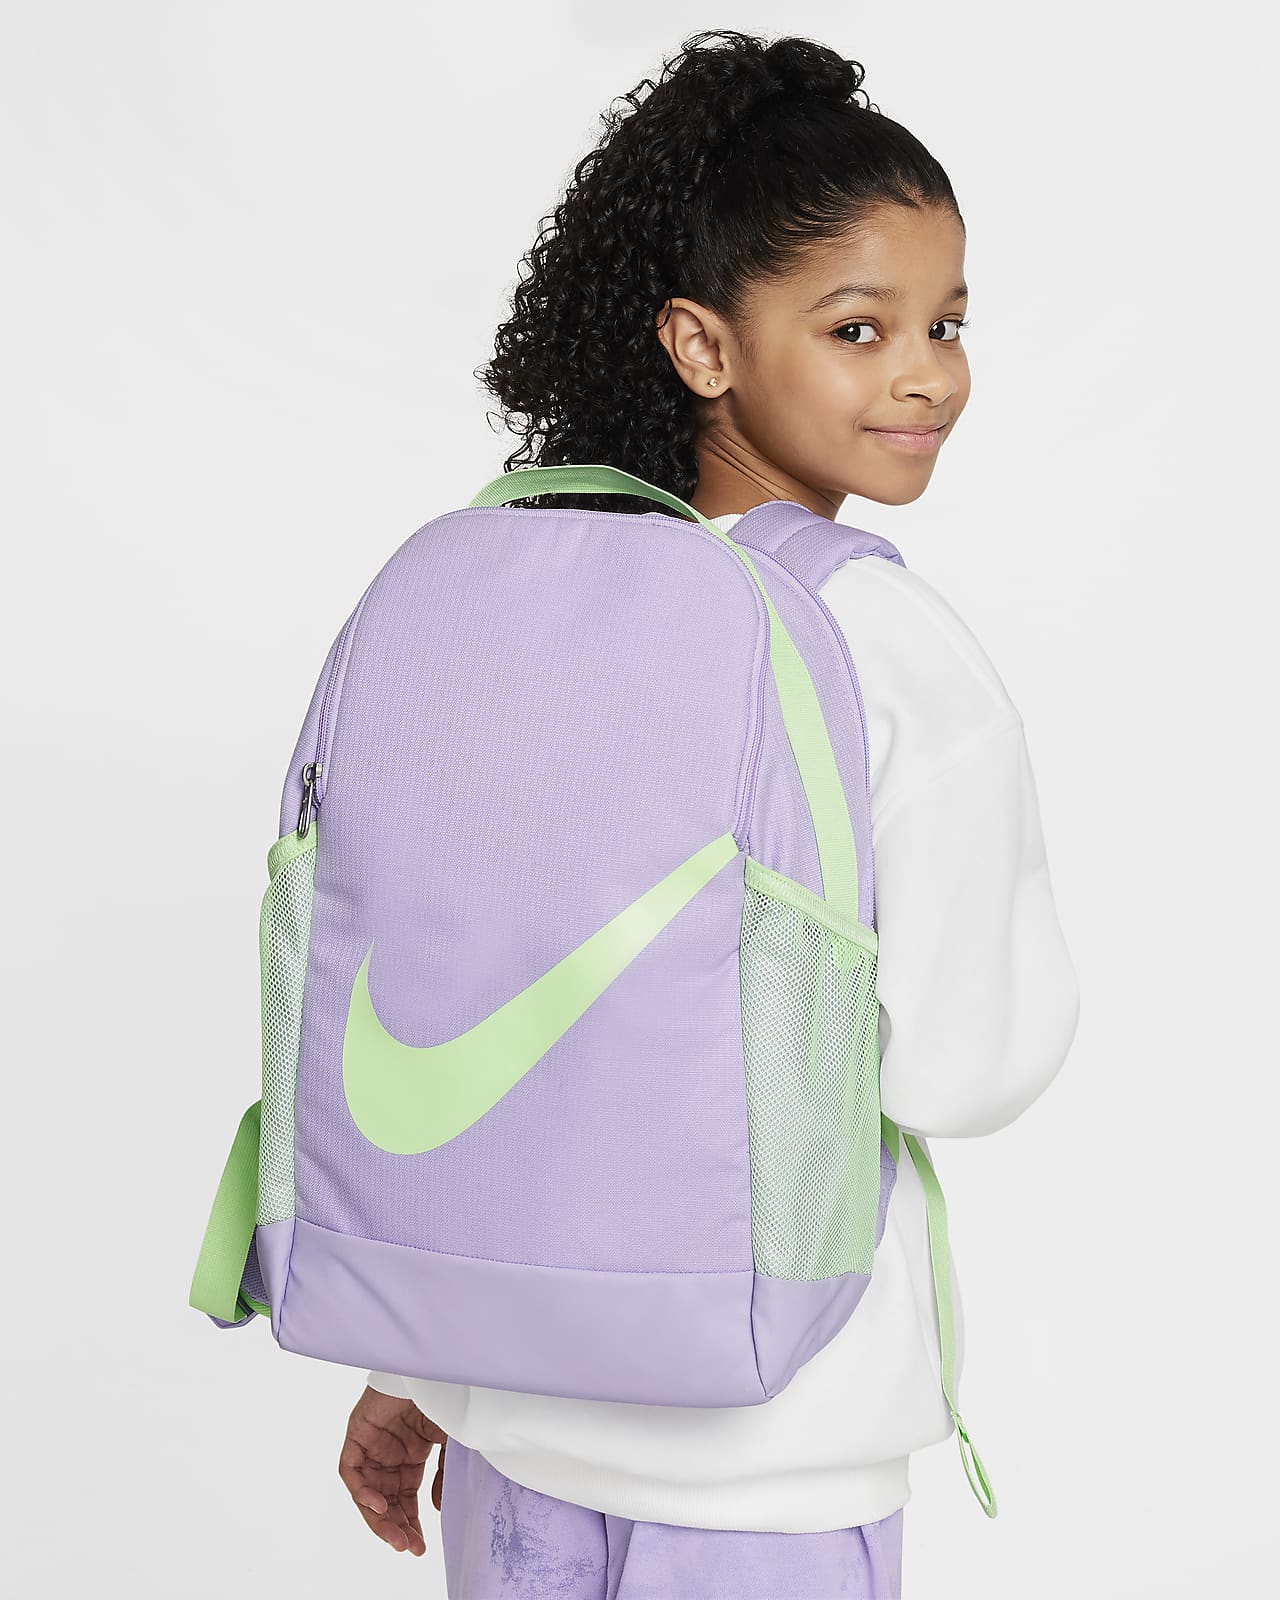 Ryggsäck Nike Brasilia för barn (18L)